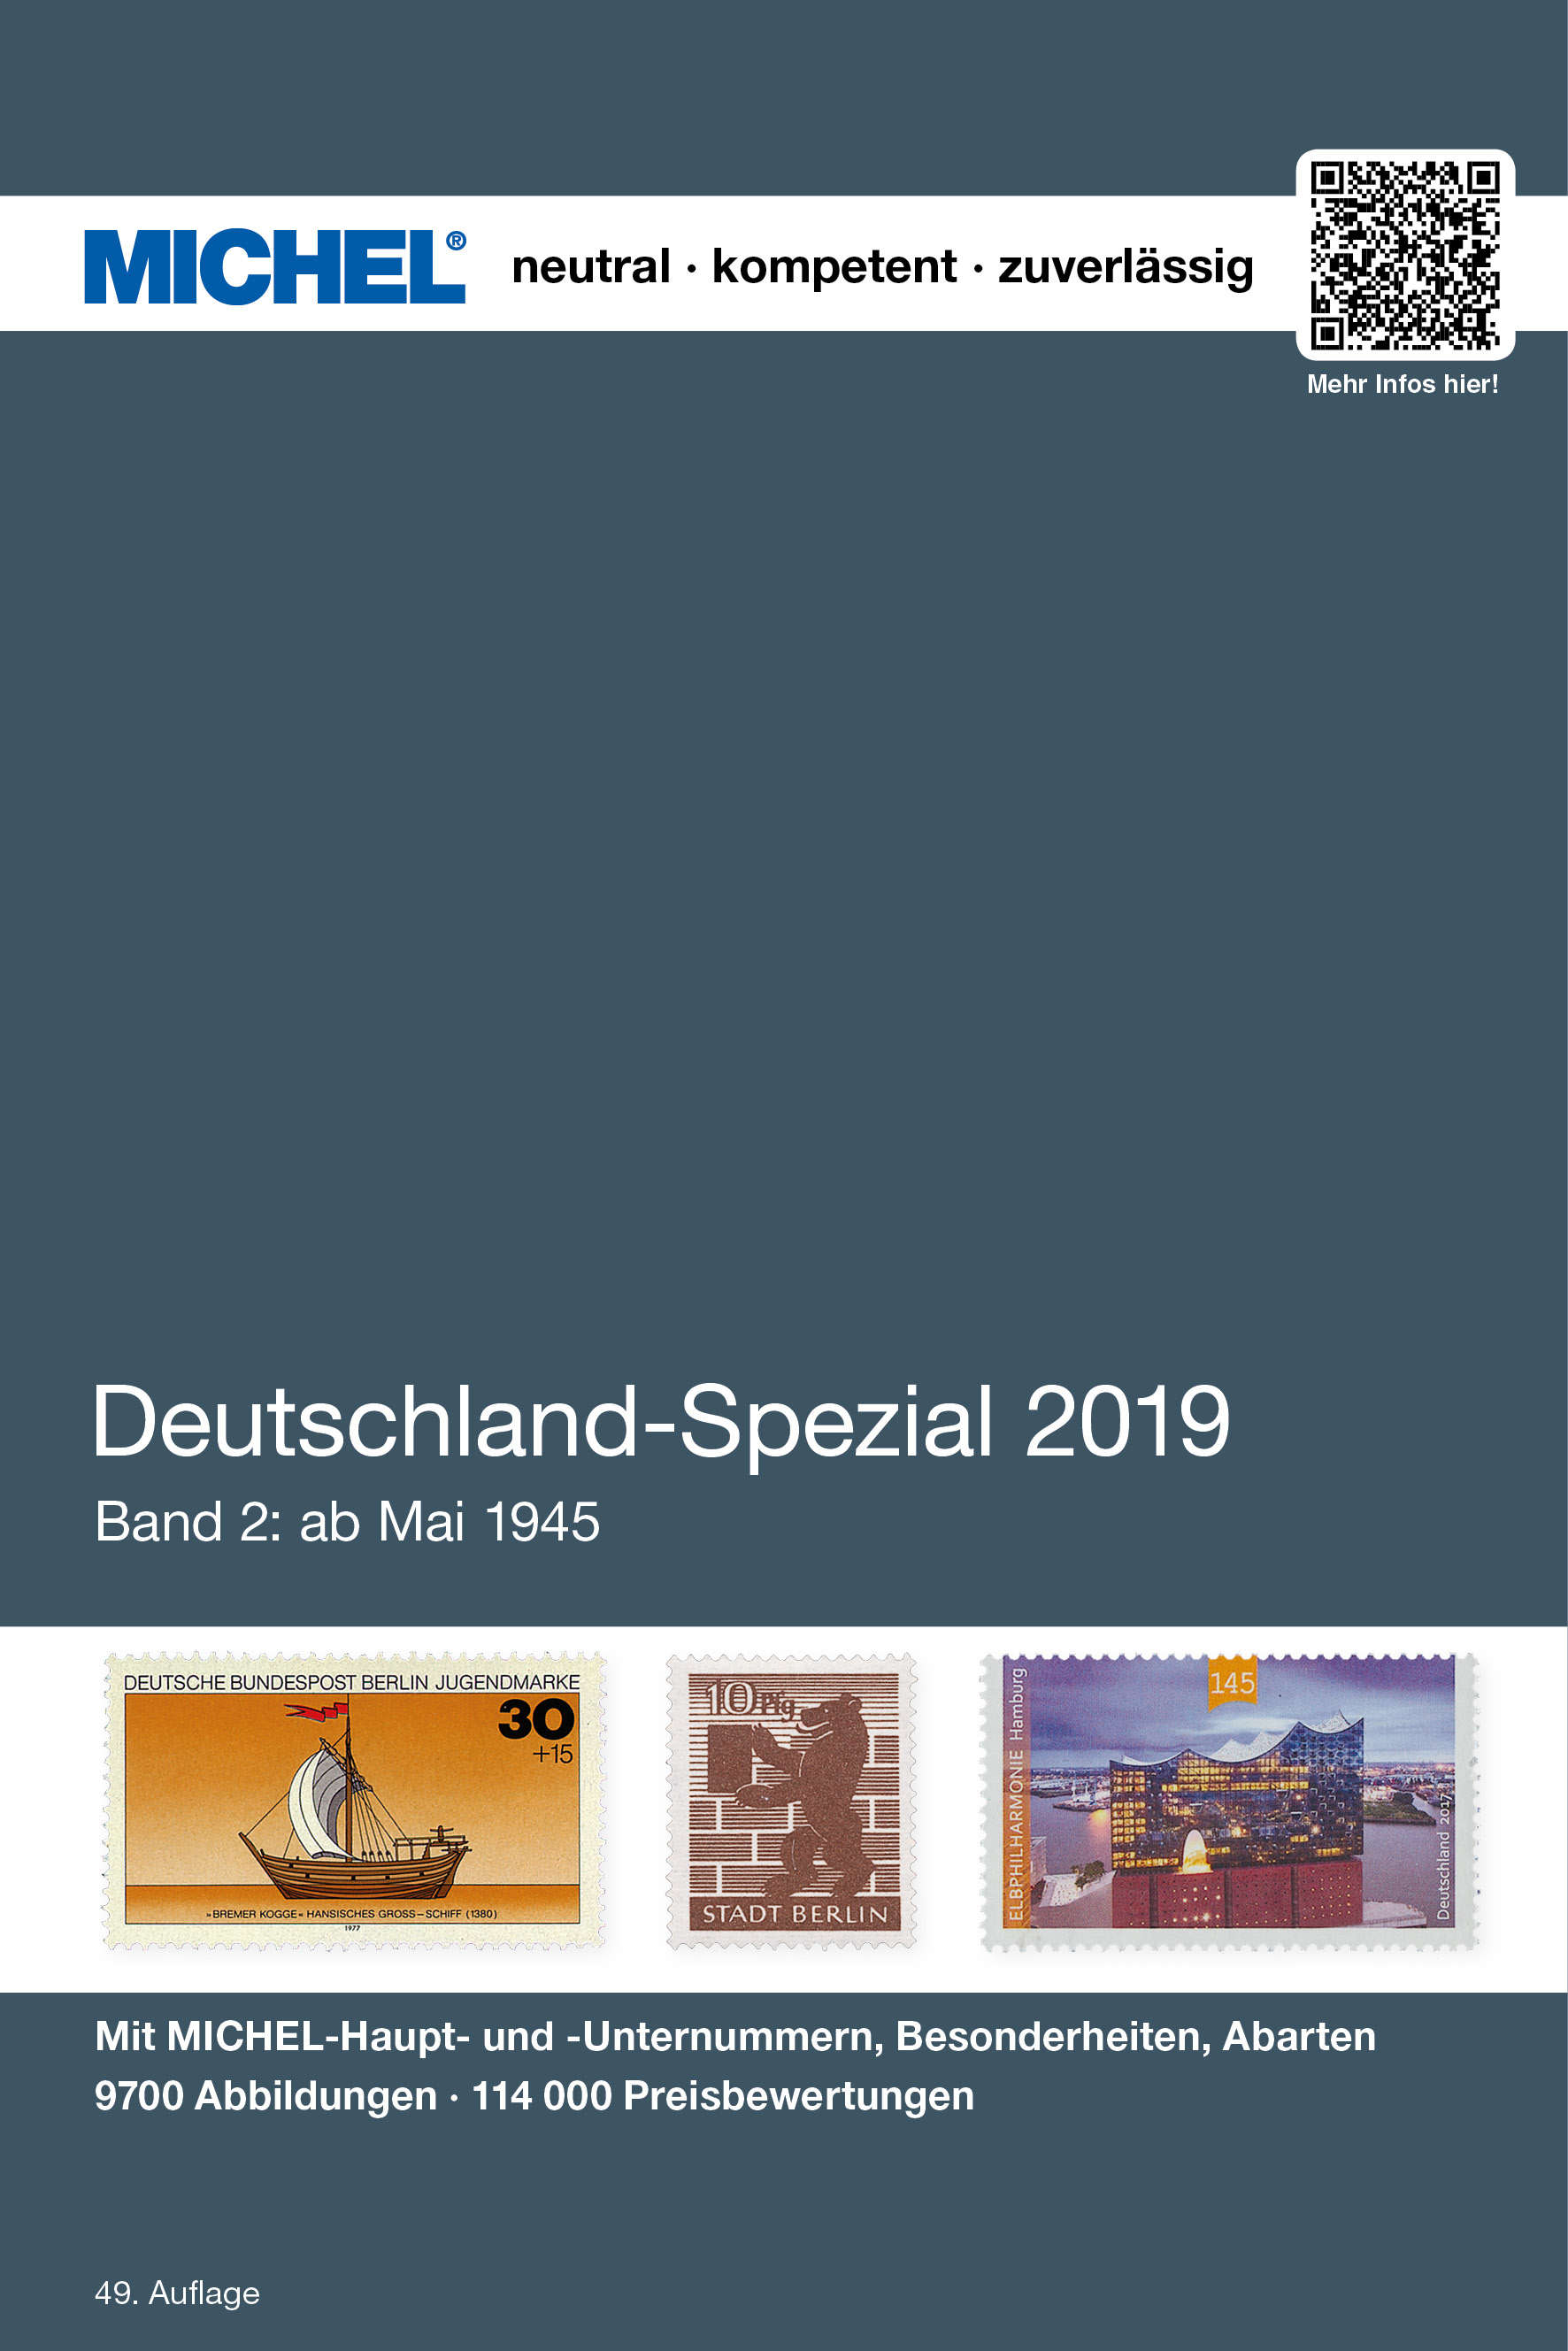 MICHEL Katalog DeutschlandSpezial 2019 Band 2 in Farbe eBay